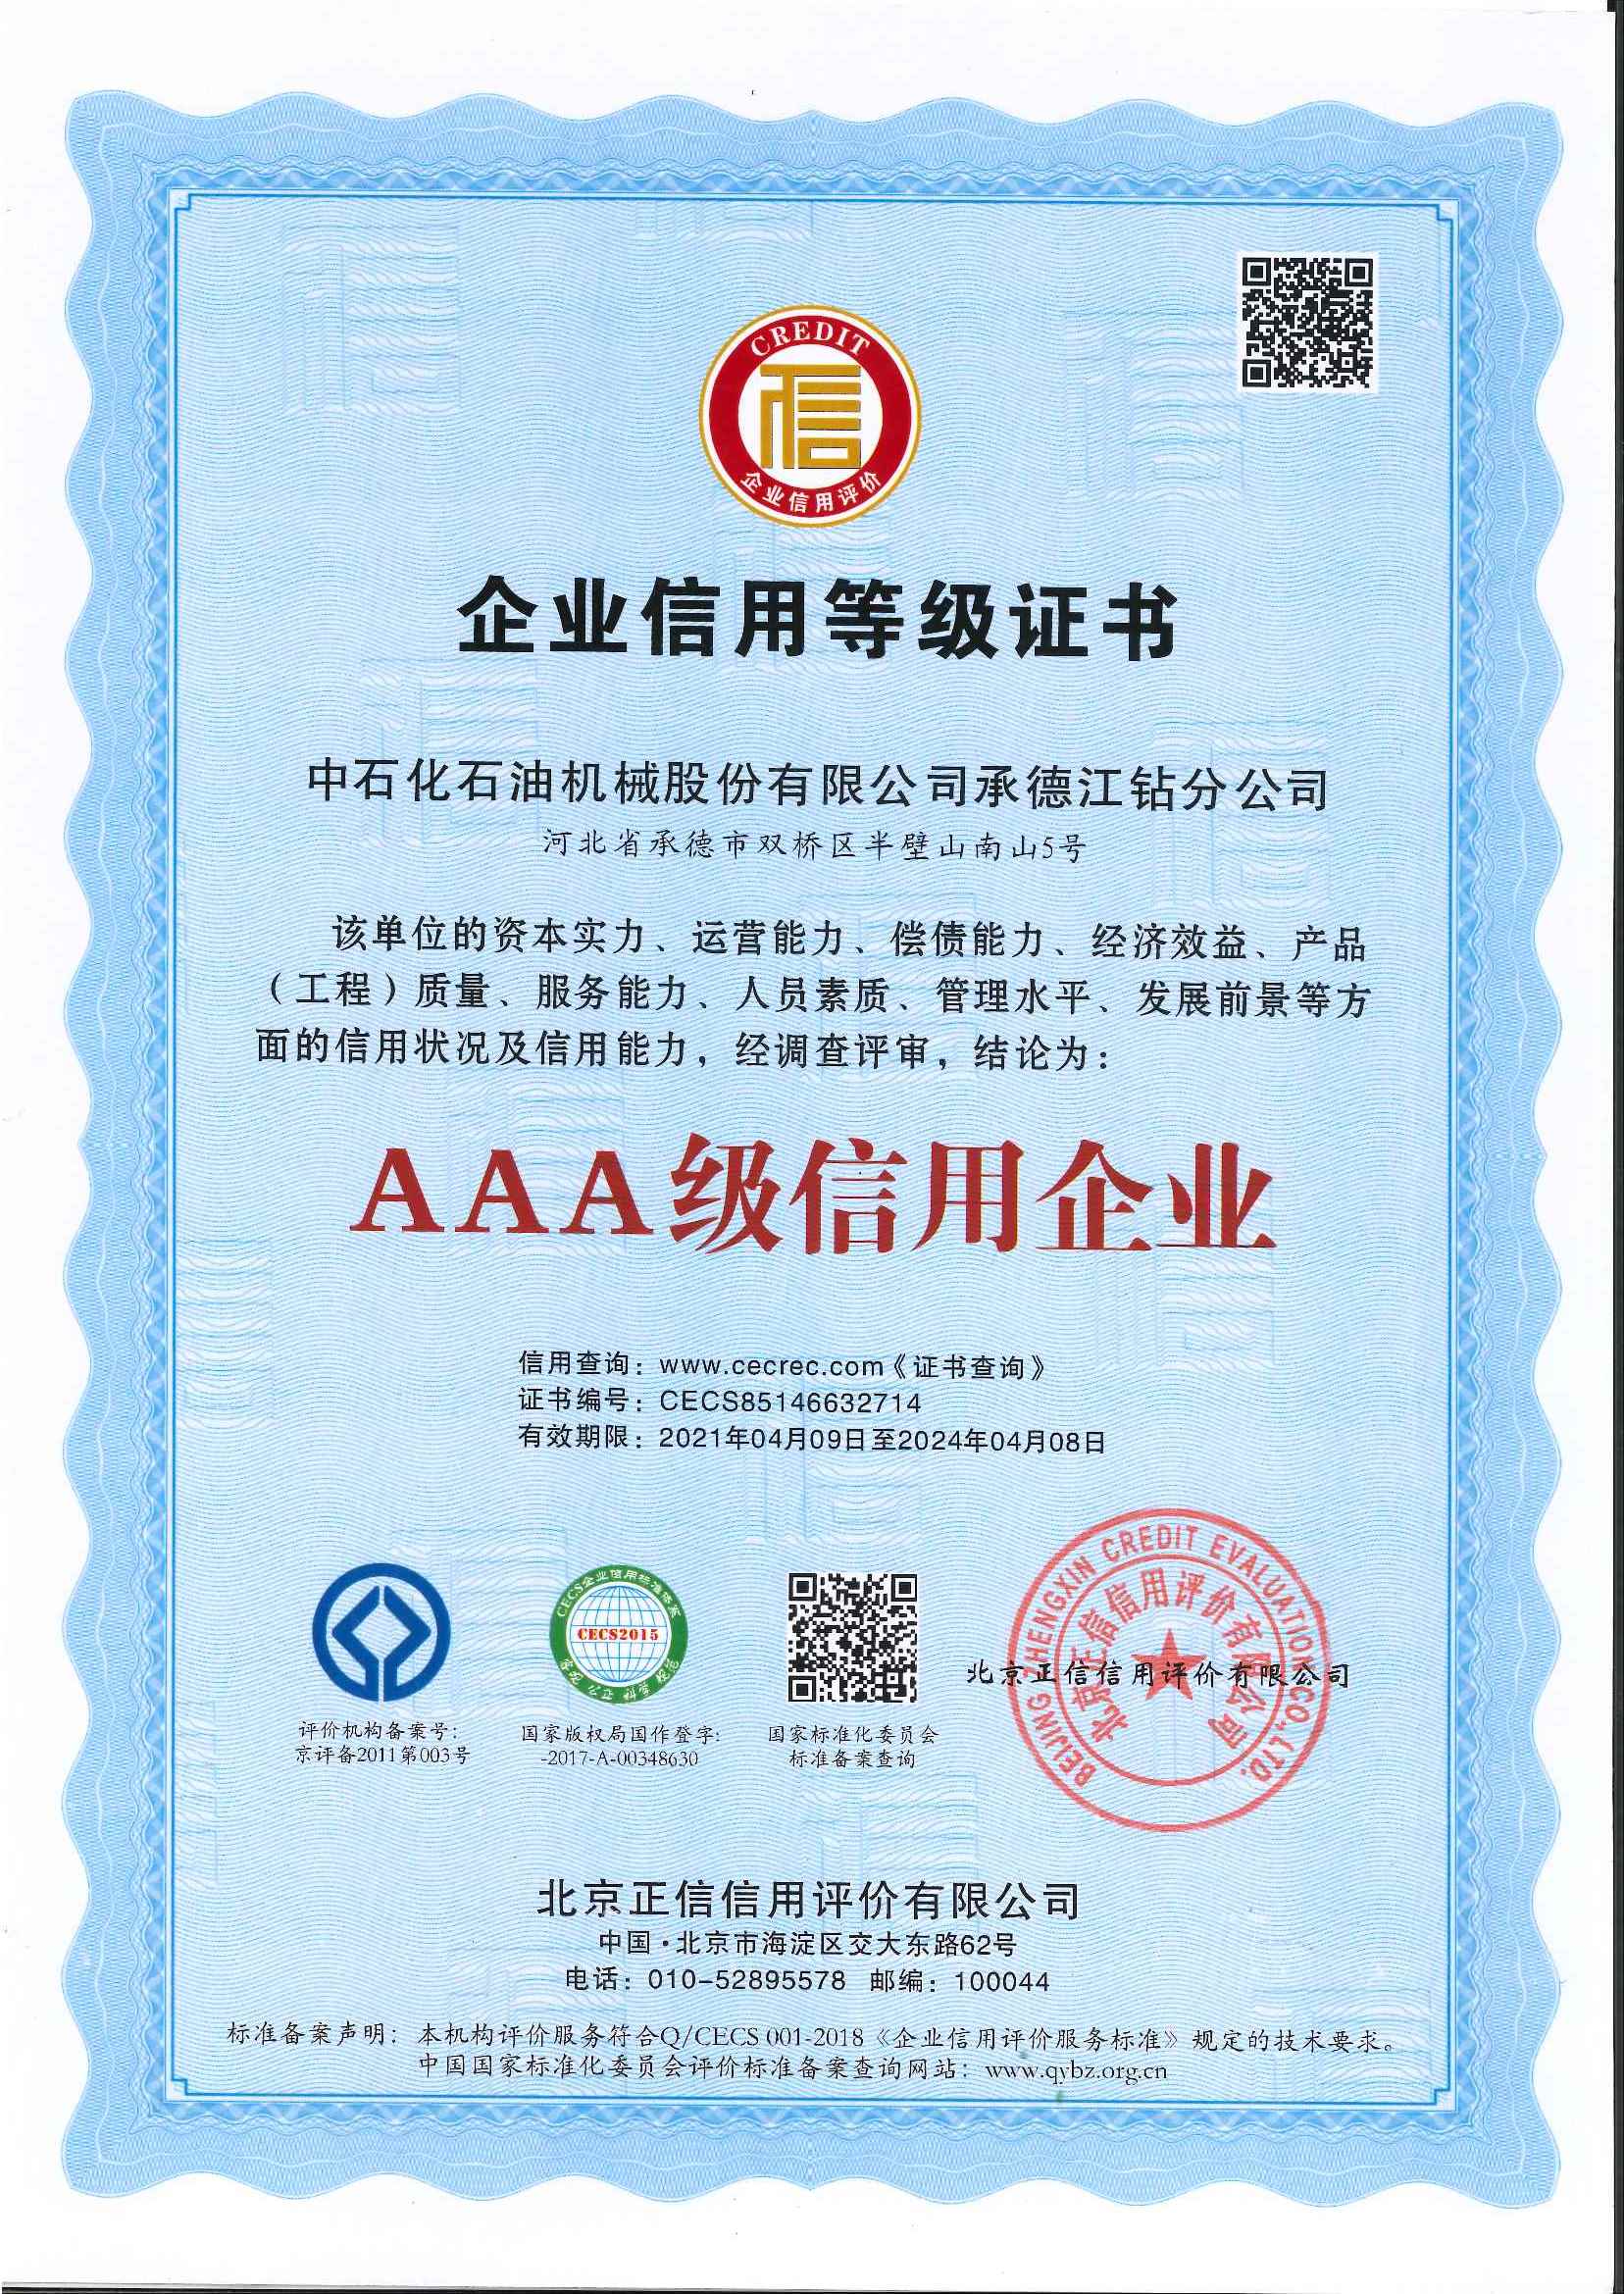 AAA sertifikat o kreditnom rejtingu preduzeća (kineski) 2024yv1